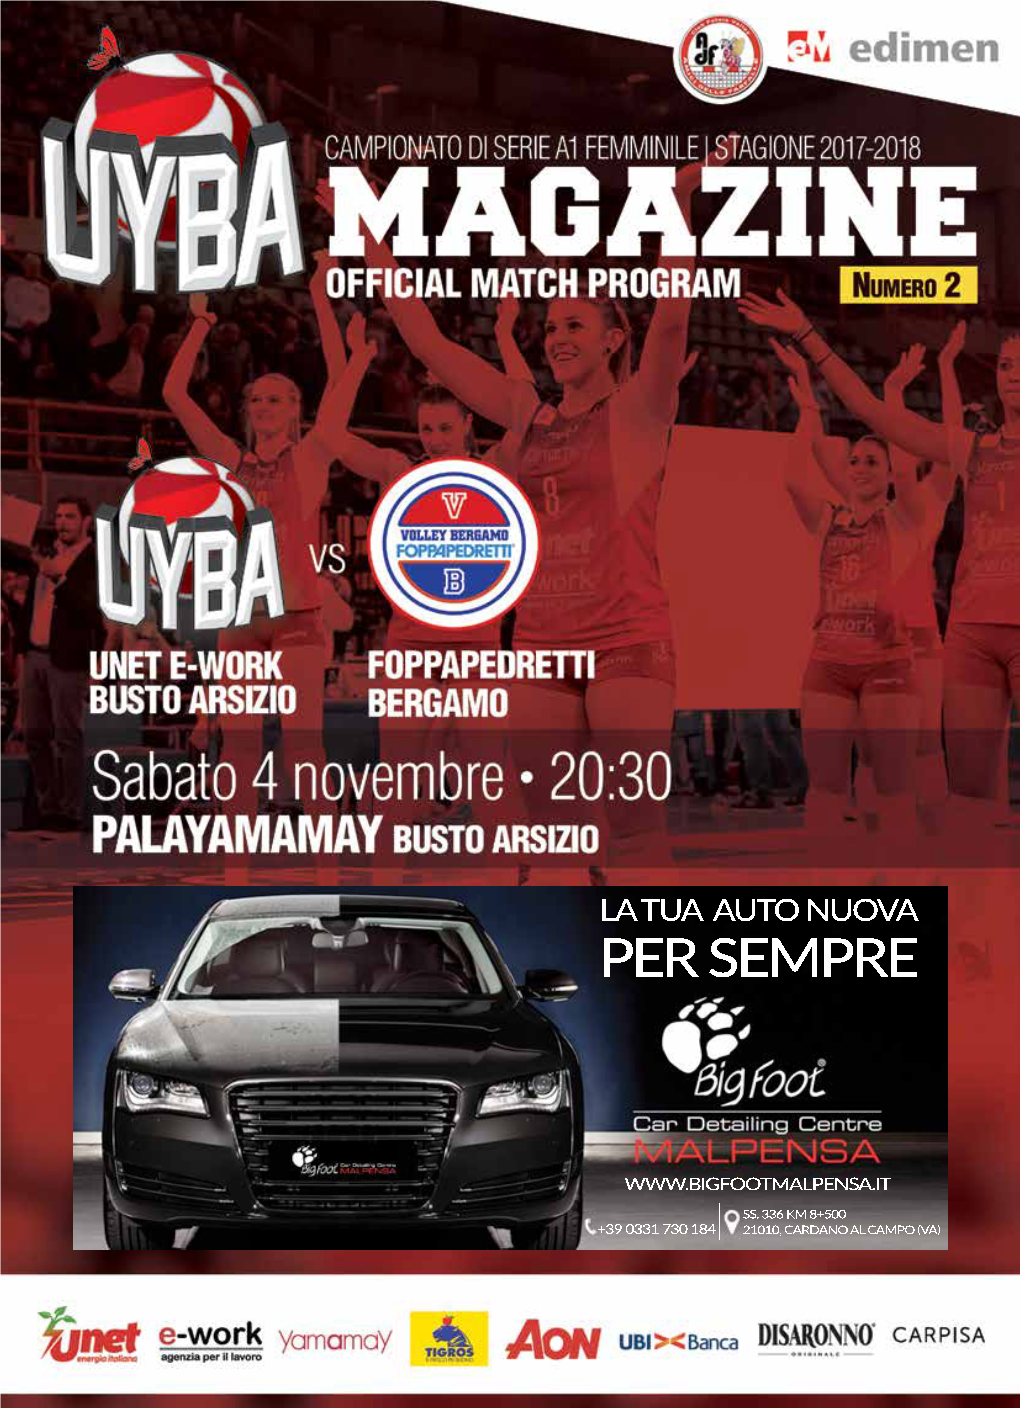 UYBA MAGAZINE | Official Match Program Edimen.Com